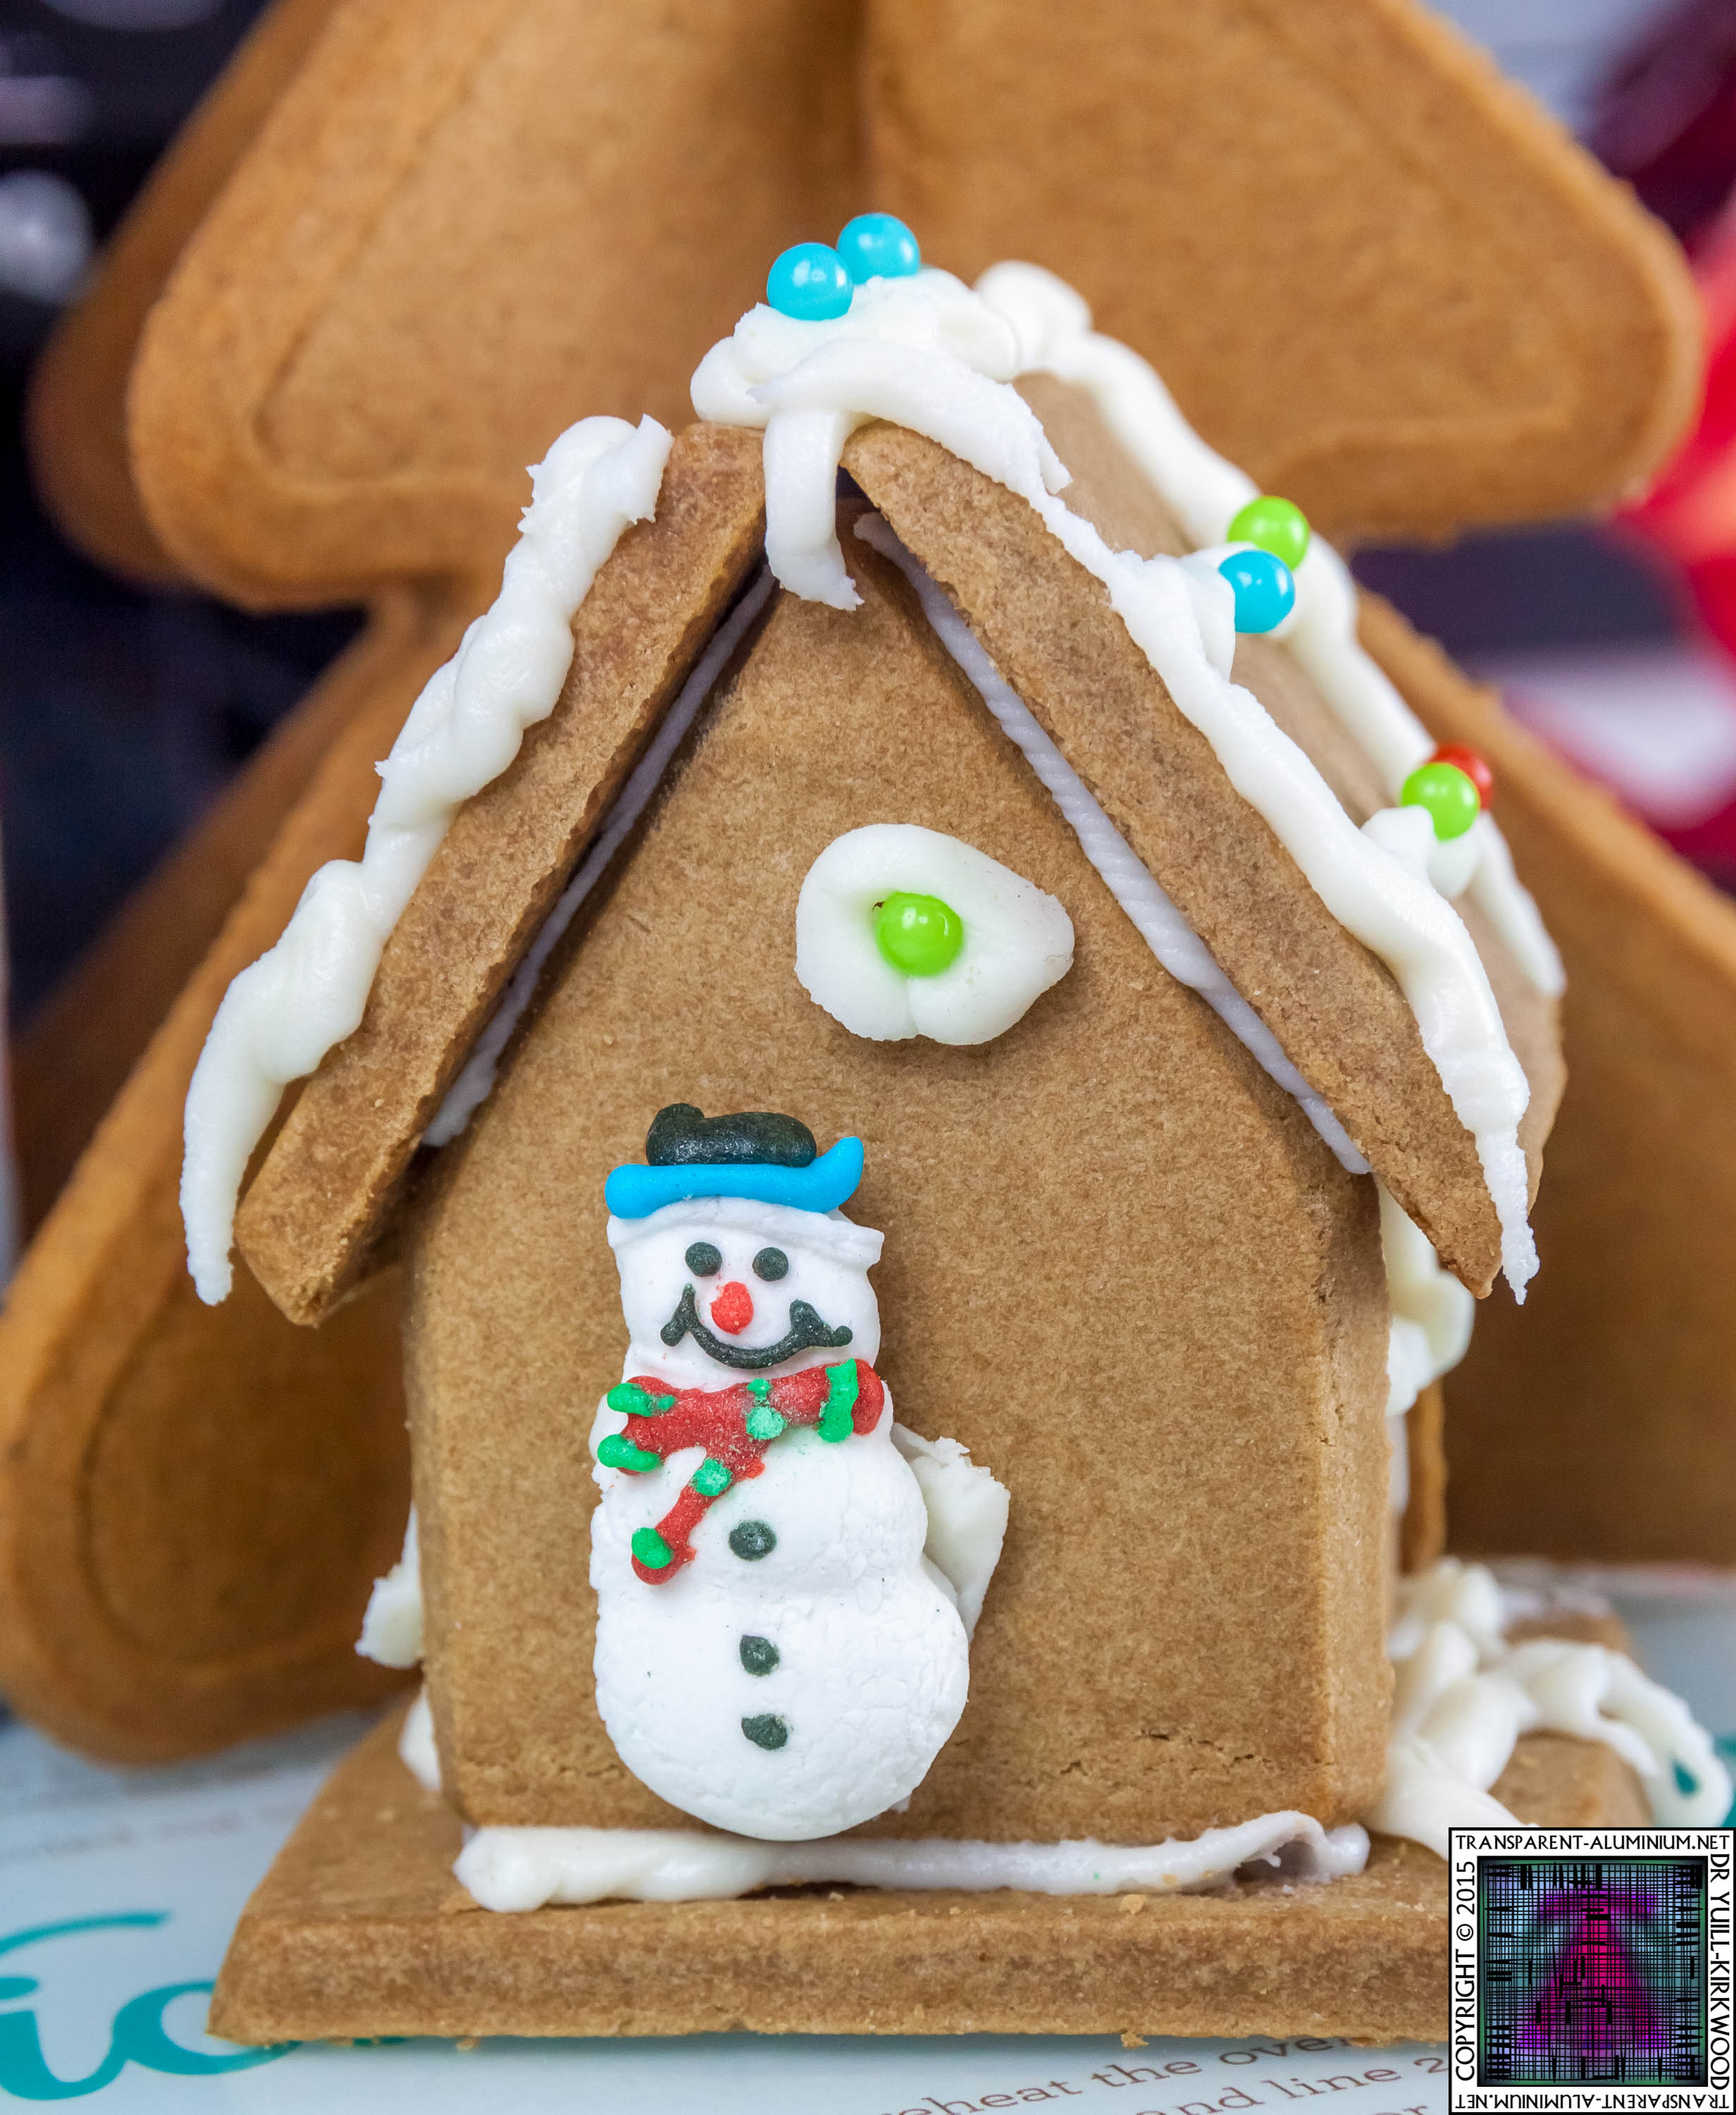 Christmas Gingerbread House – Lets Build | Transparent-Aluminium.net